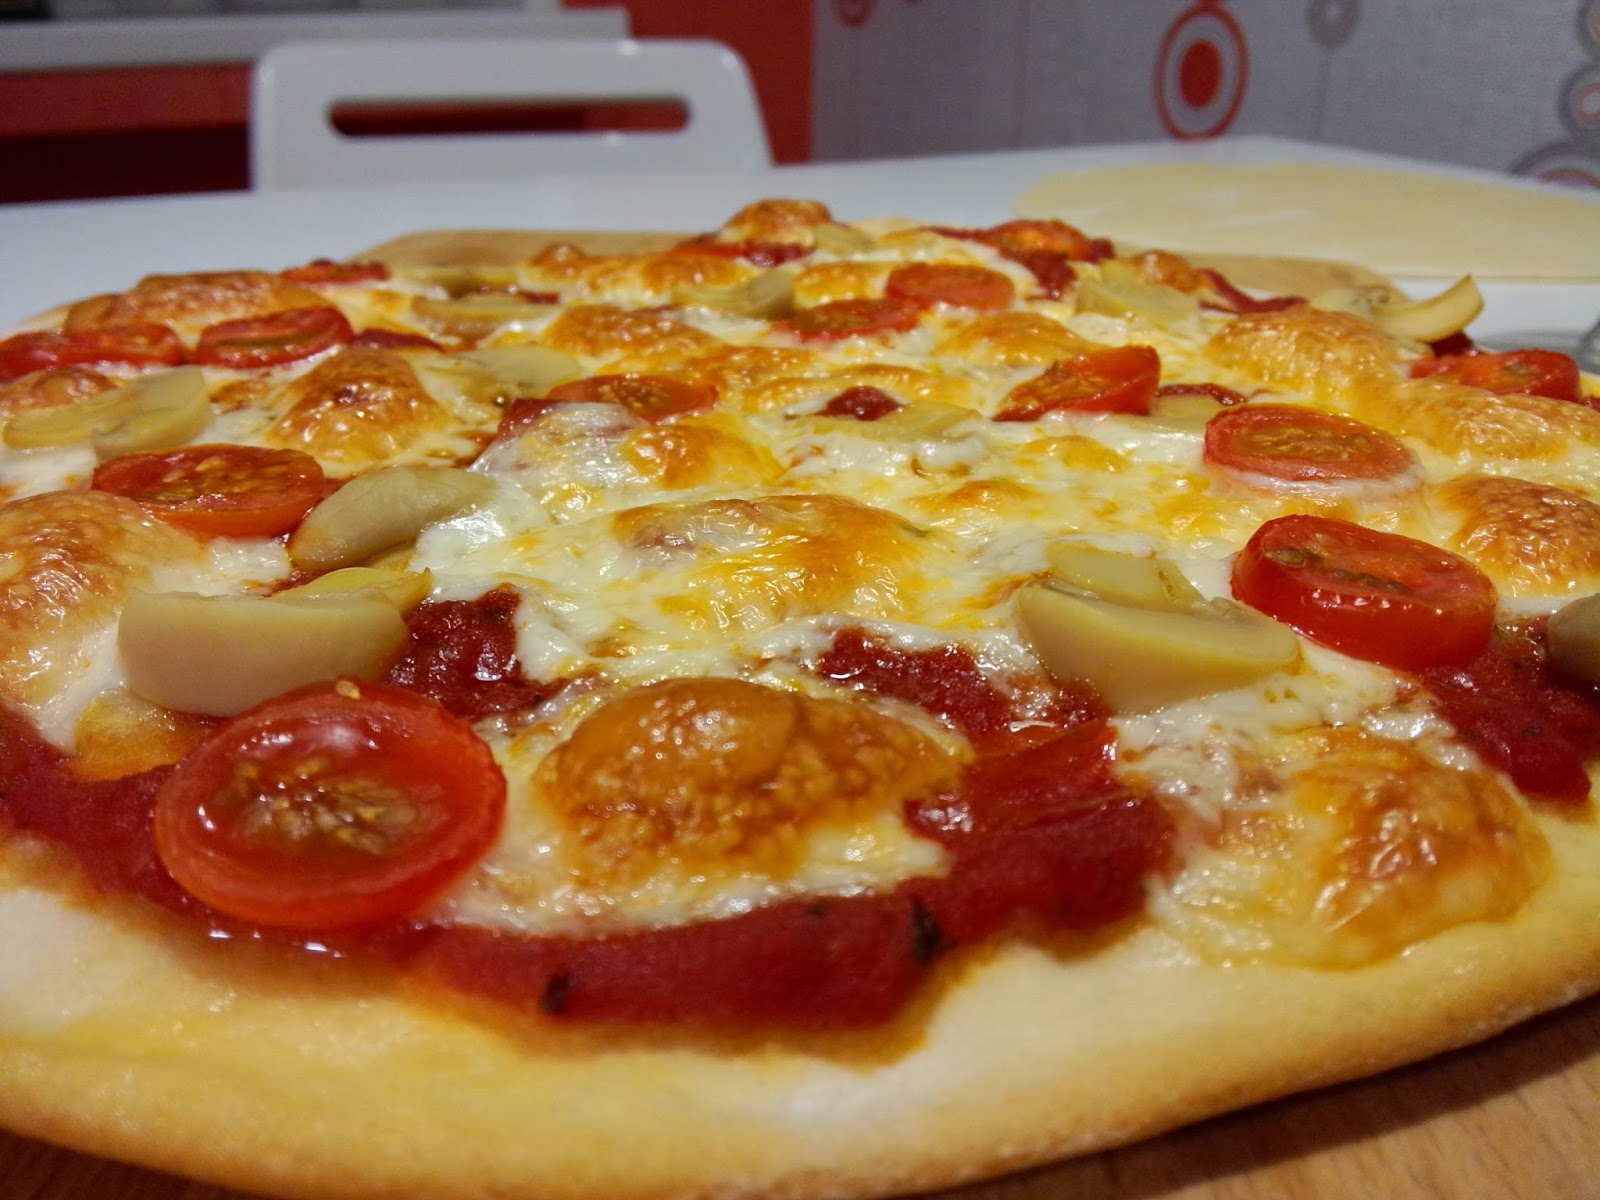 юлия высоцкая рецепт теста на пиццу фото 103